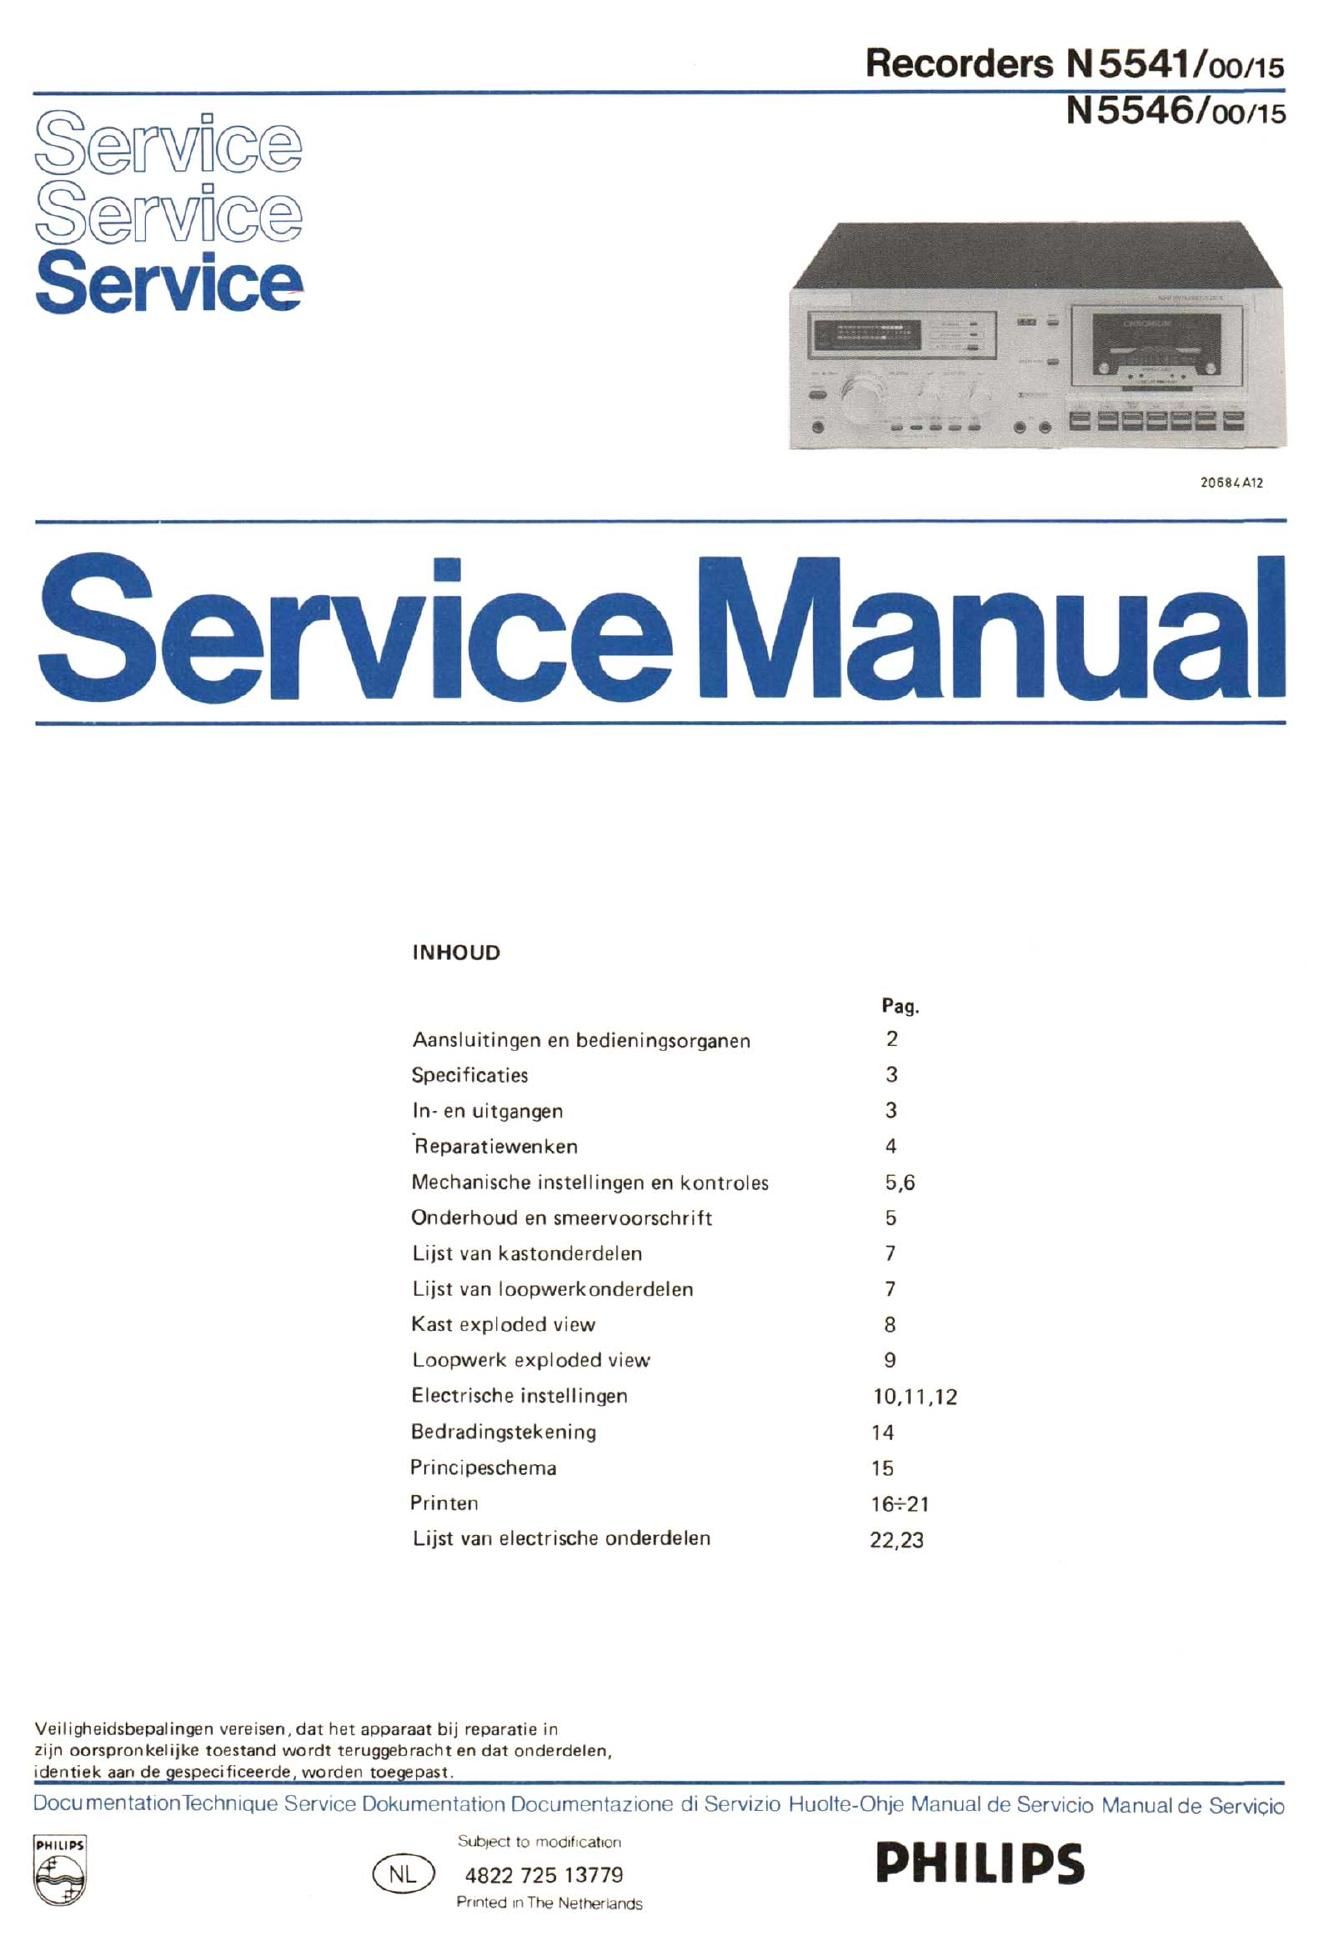 philips n 5541 5546 service manual